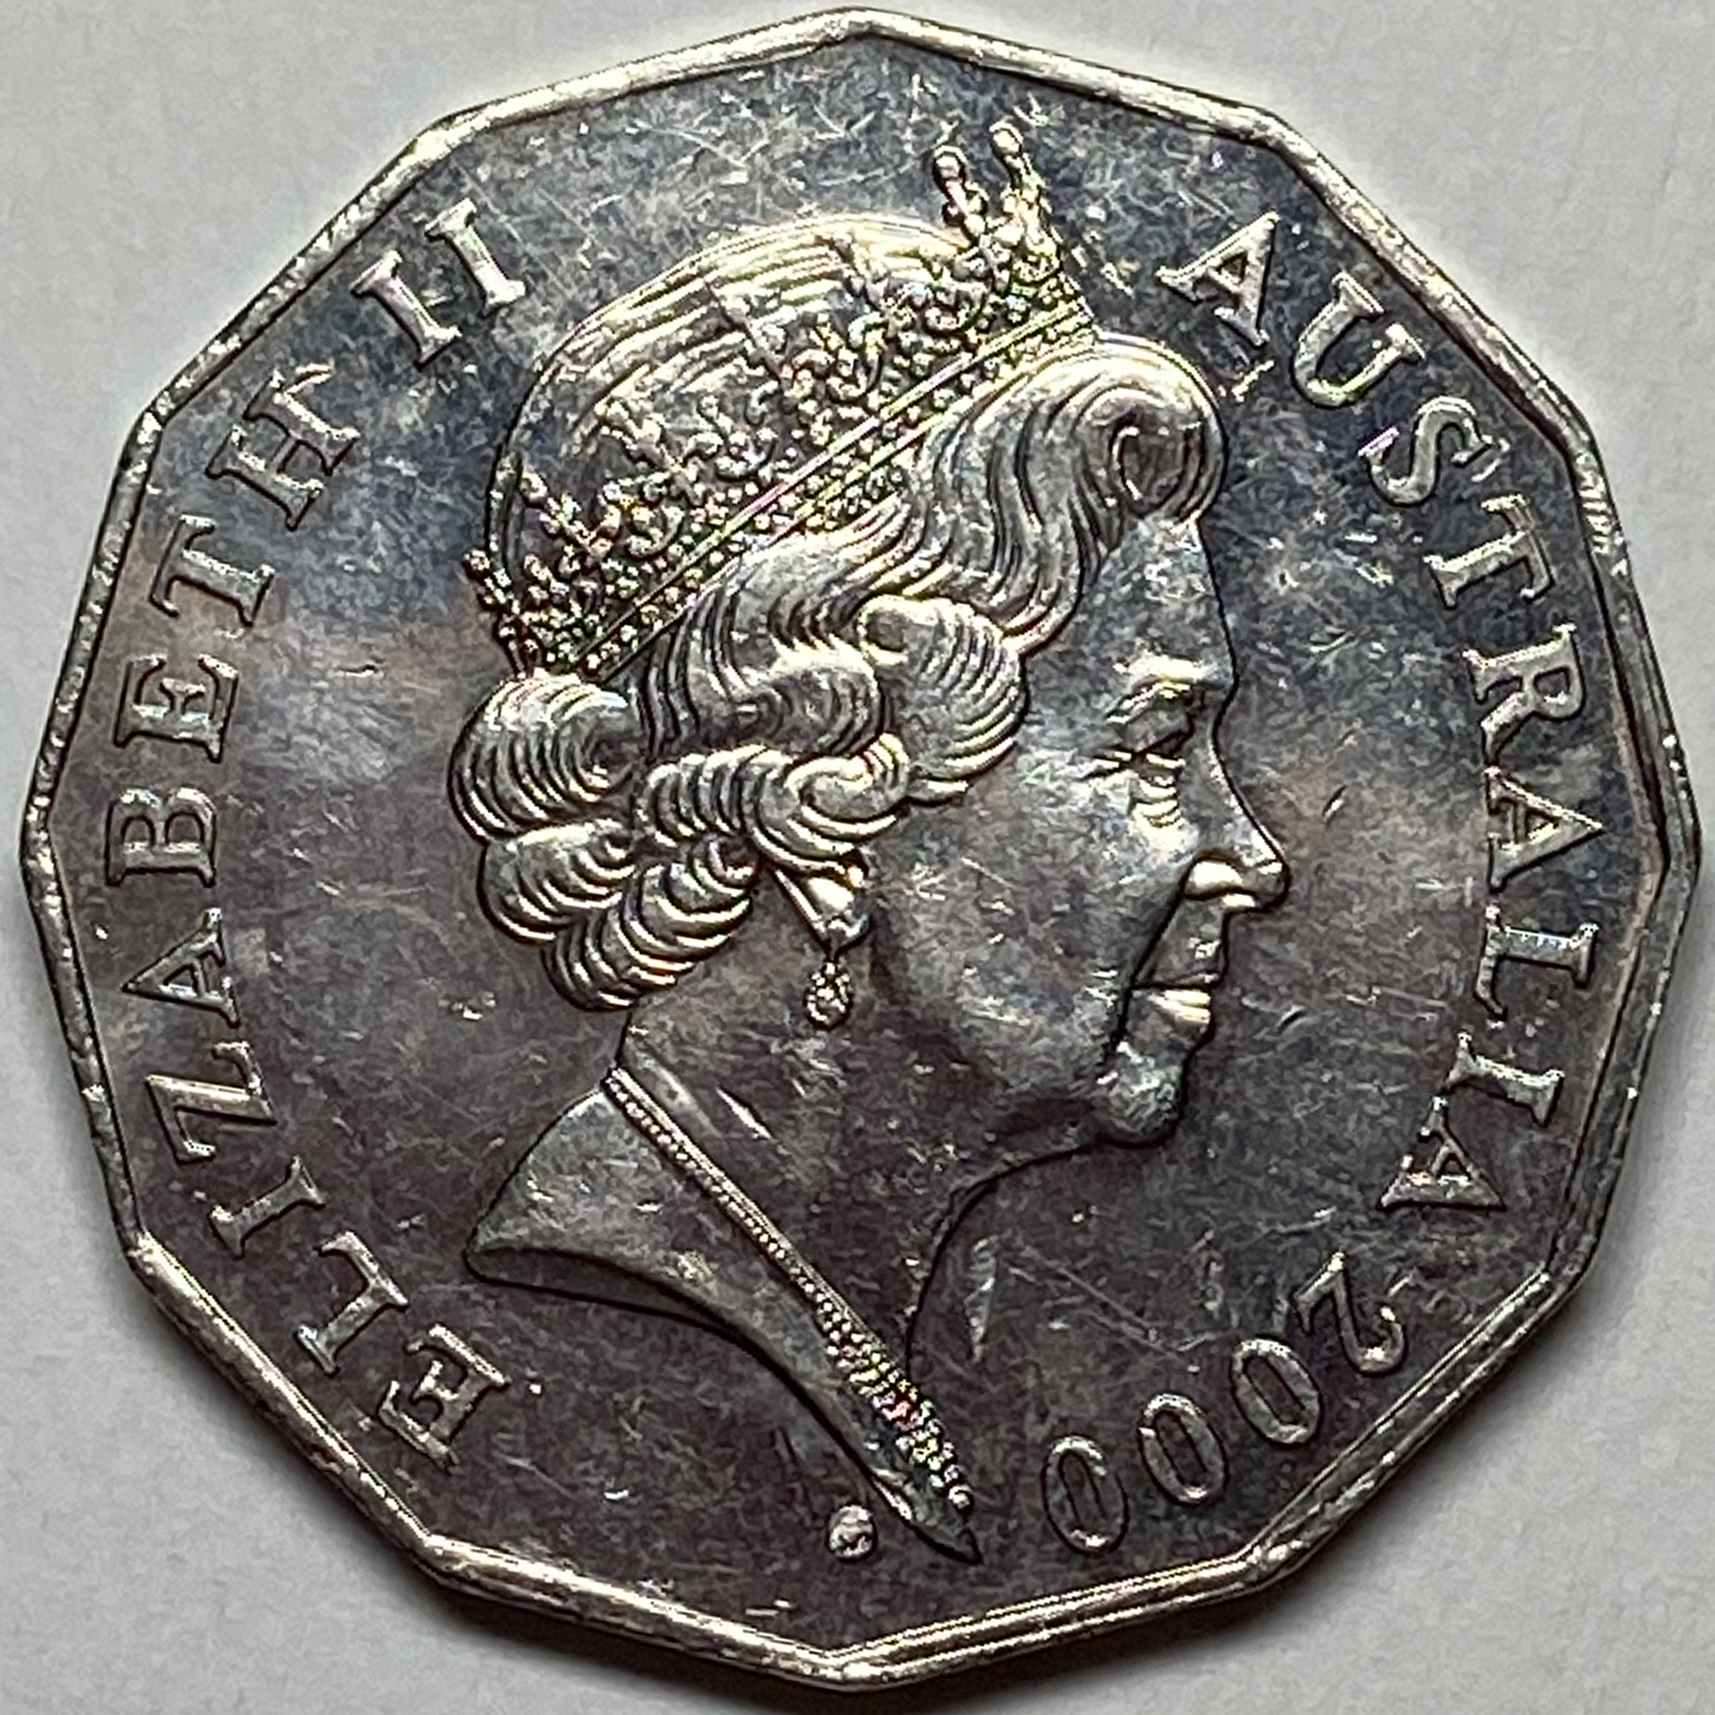 2000 royal visit 50c coin mintage